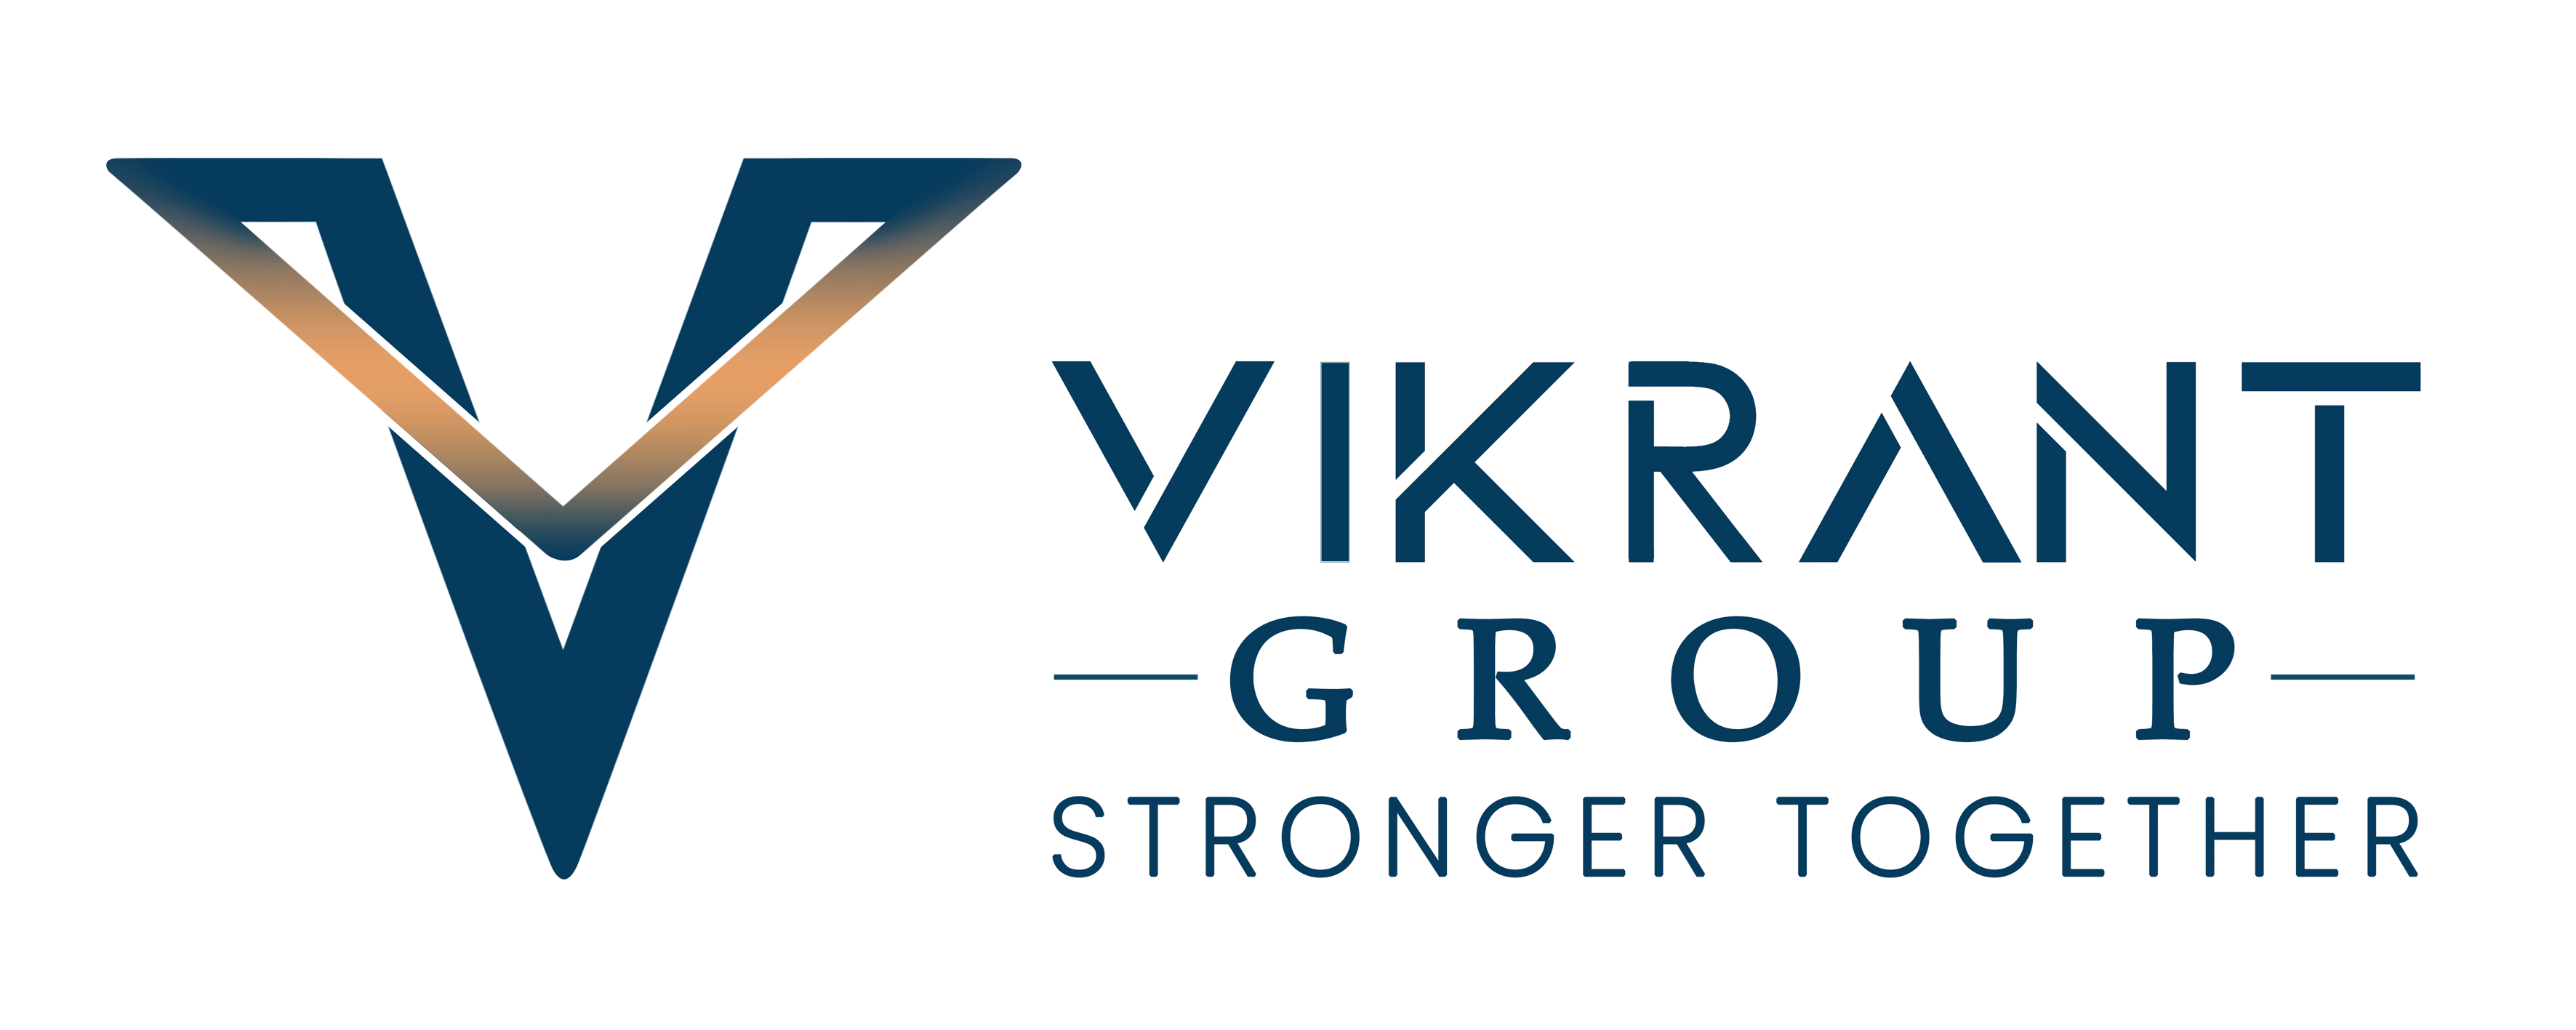 Vikrant Group